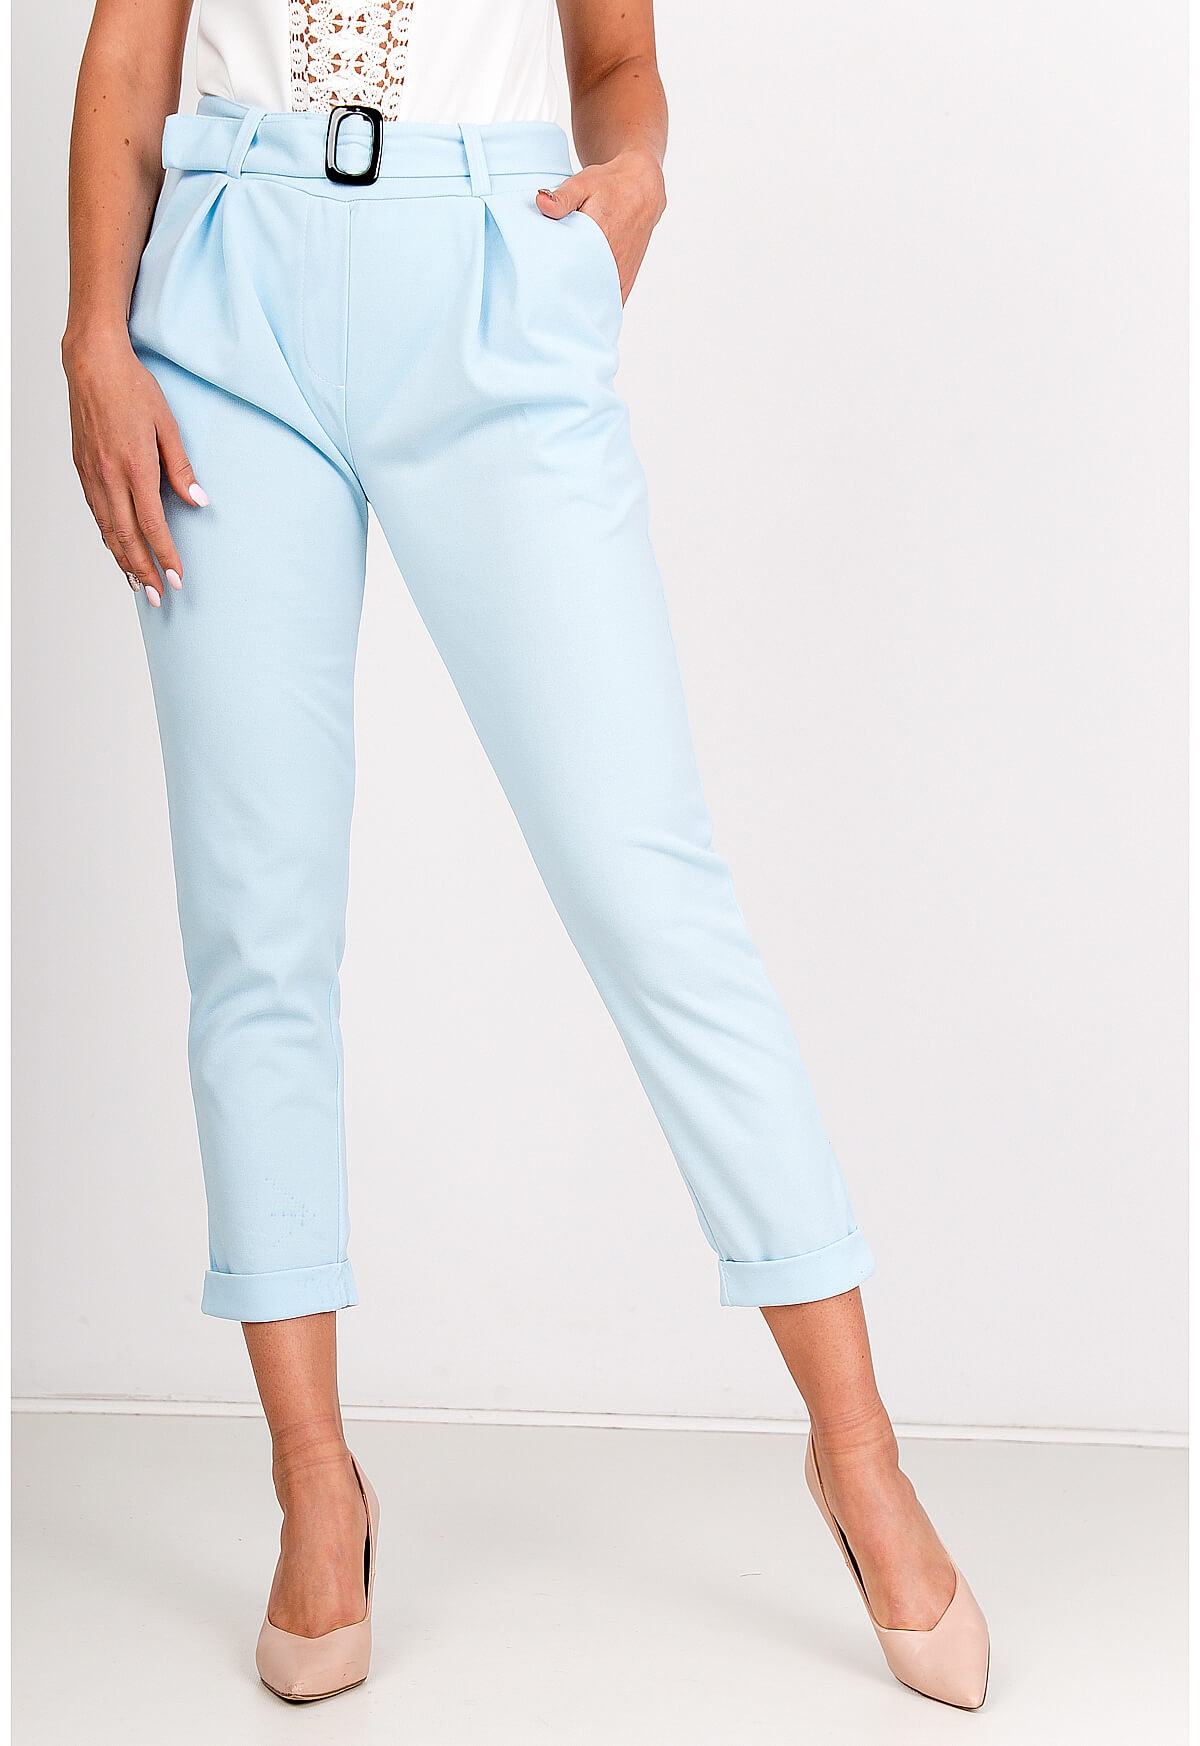 Stylish women's trousers with belt - blue,